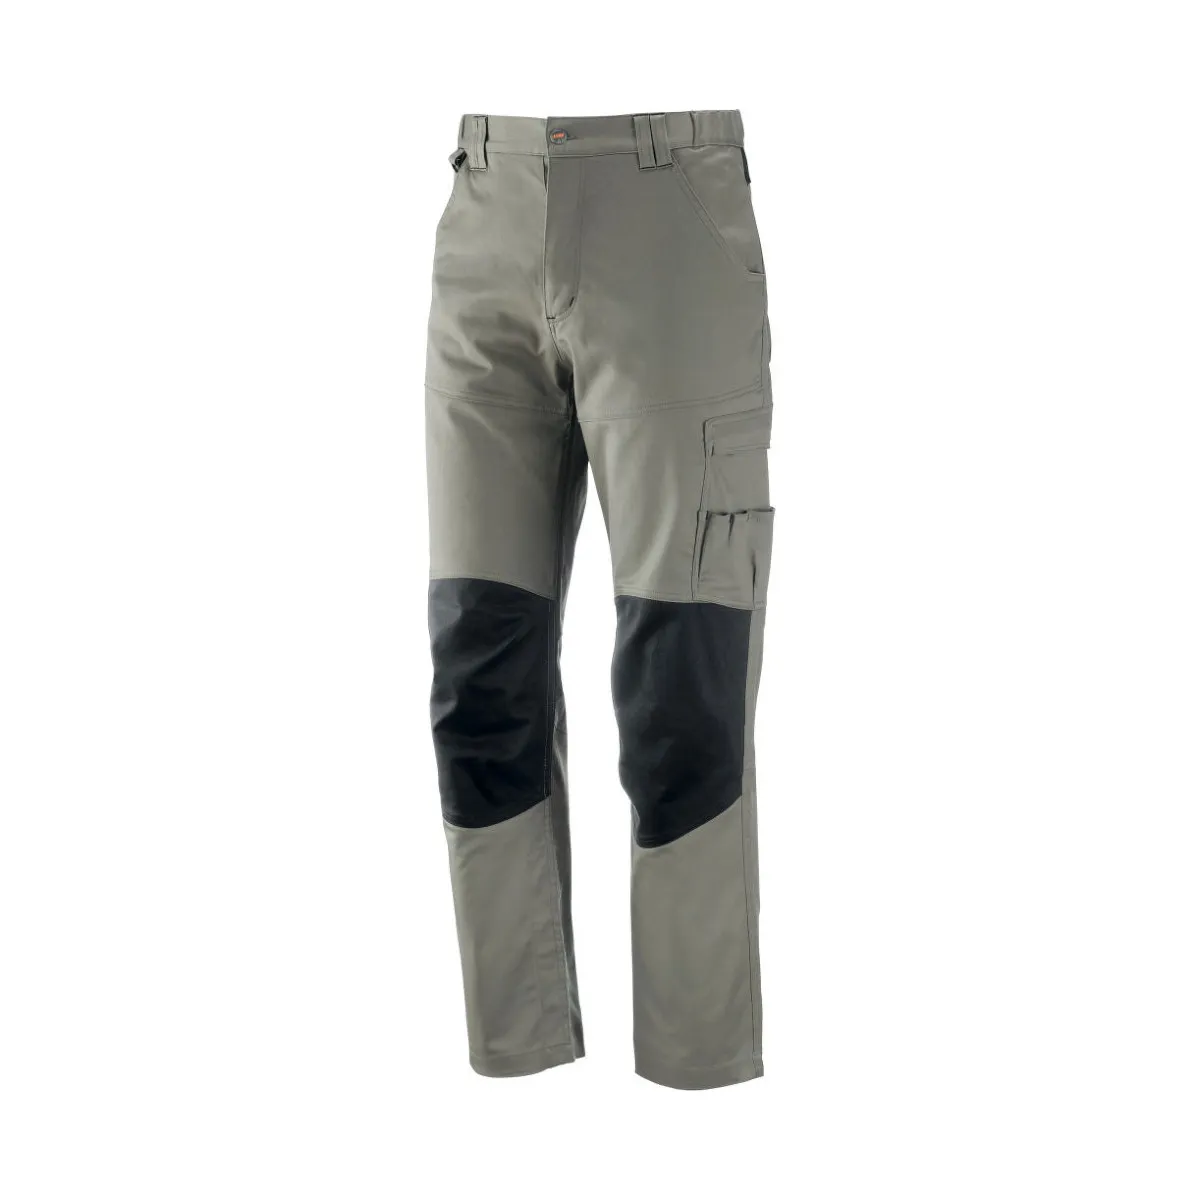 Radne pantalone EVO STRETCH sive - Neri 